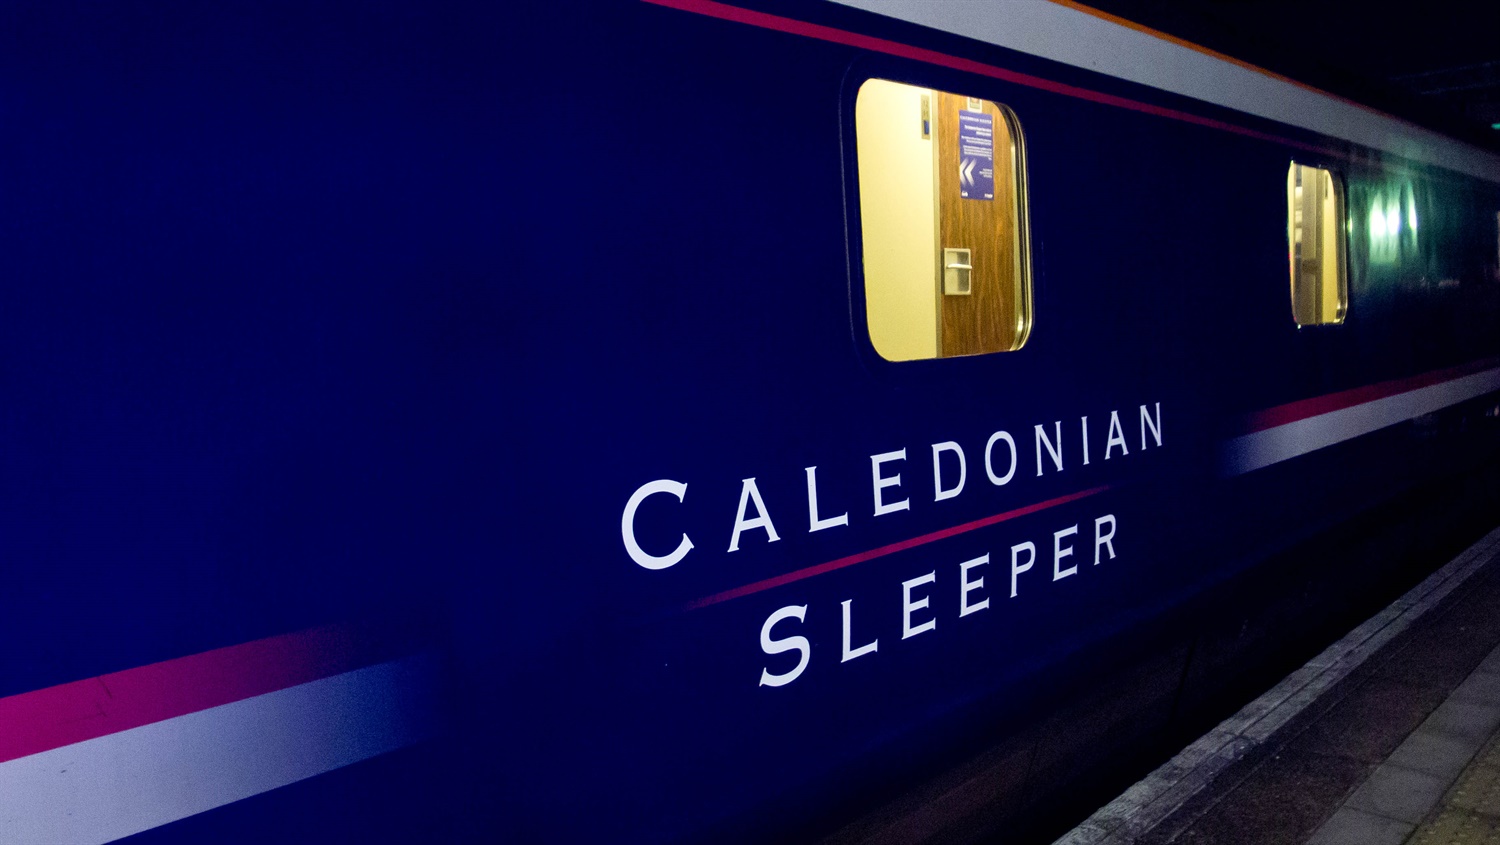 GB Railfreight wins contract to haul Caledonian Sleepers